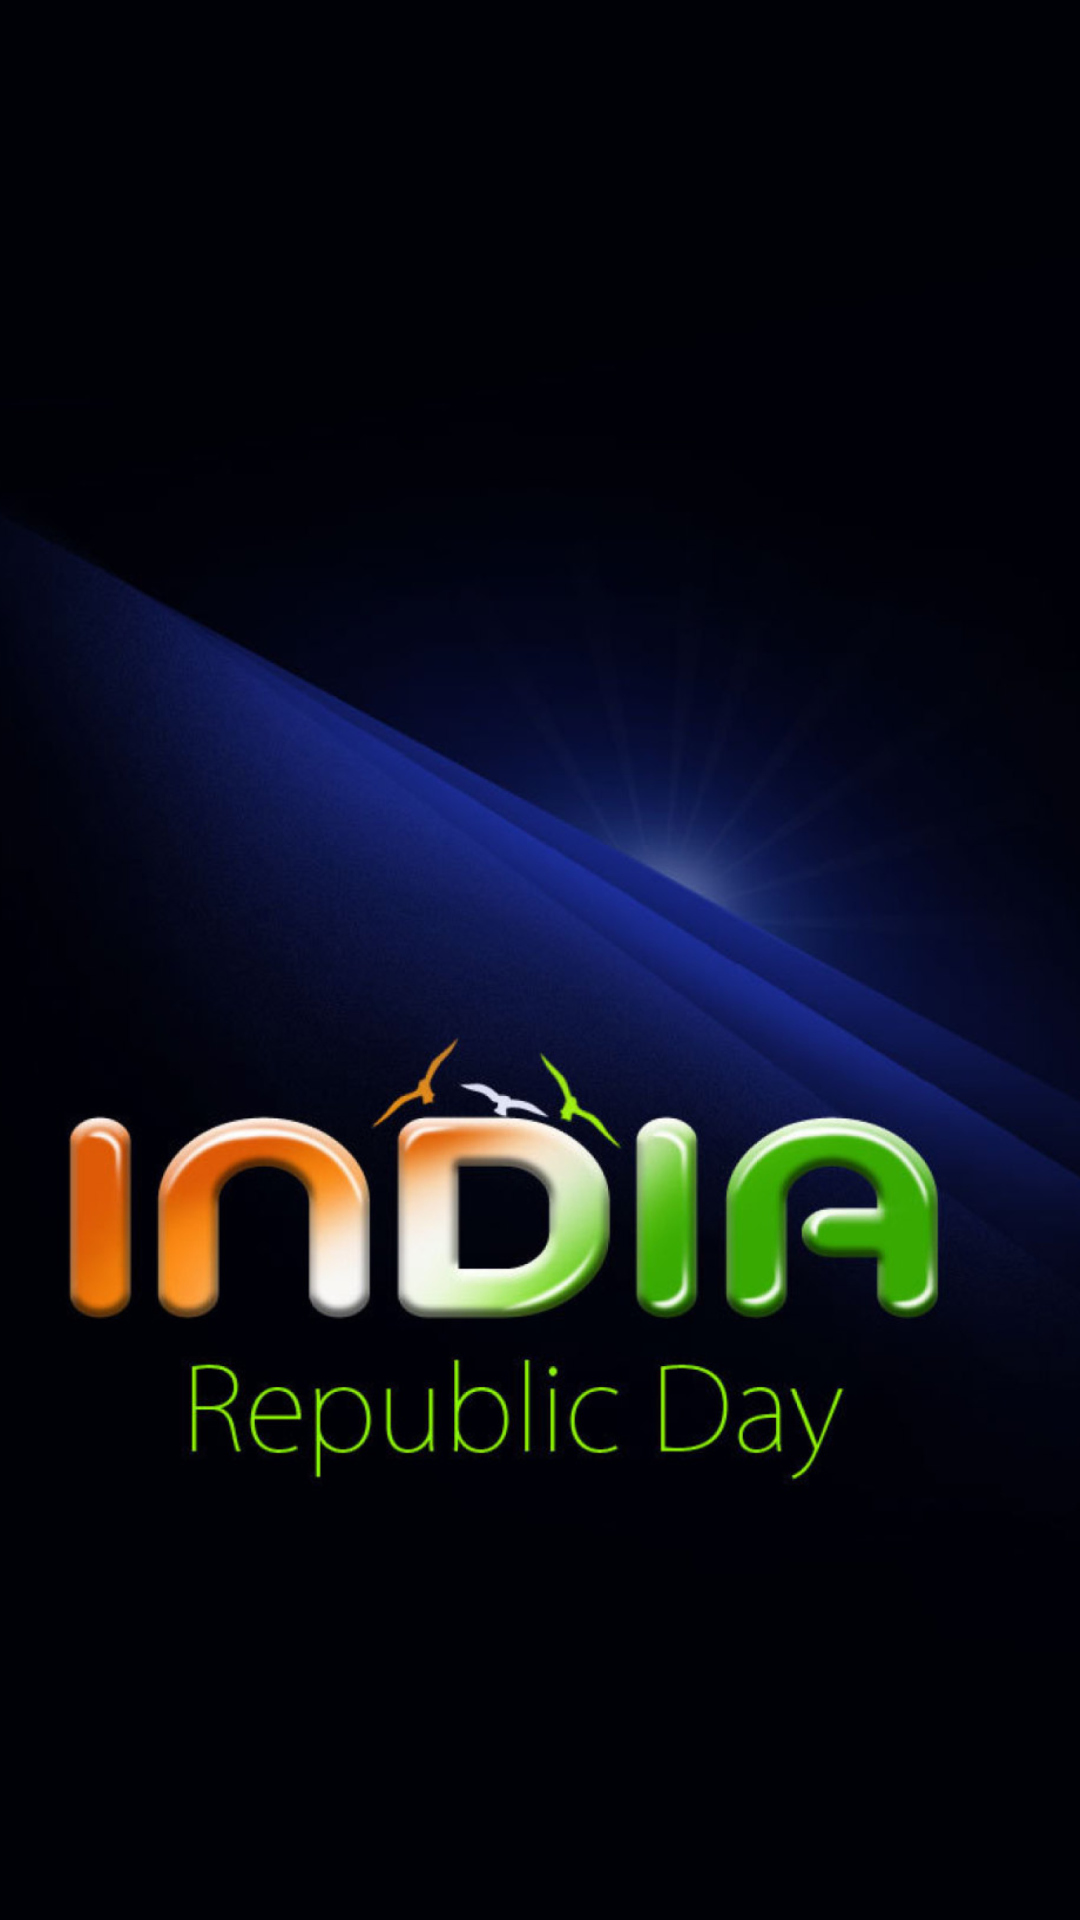 Republic Day India 26 January wallpaper 1080x1920